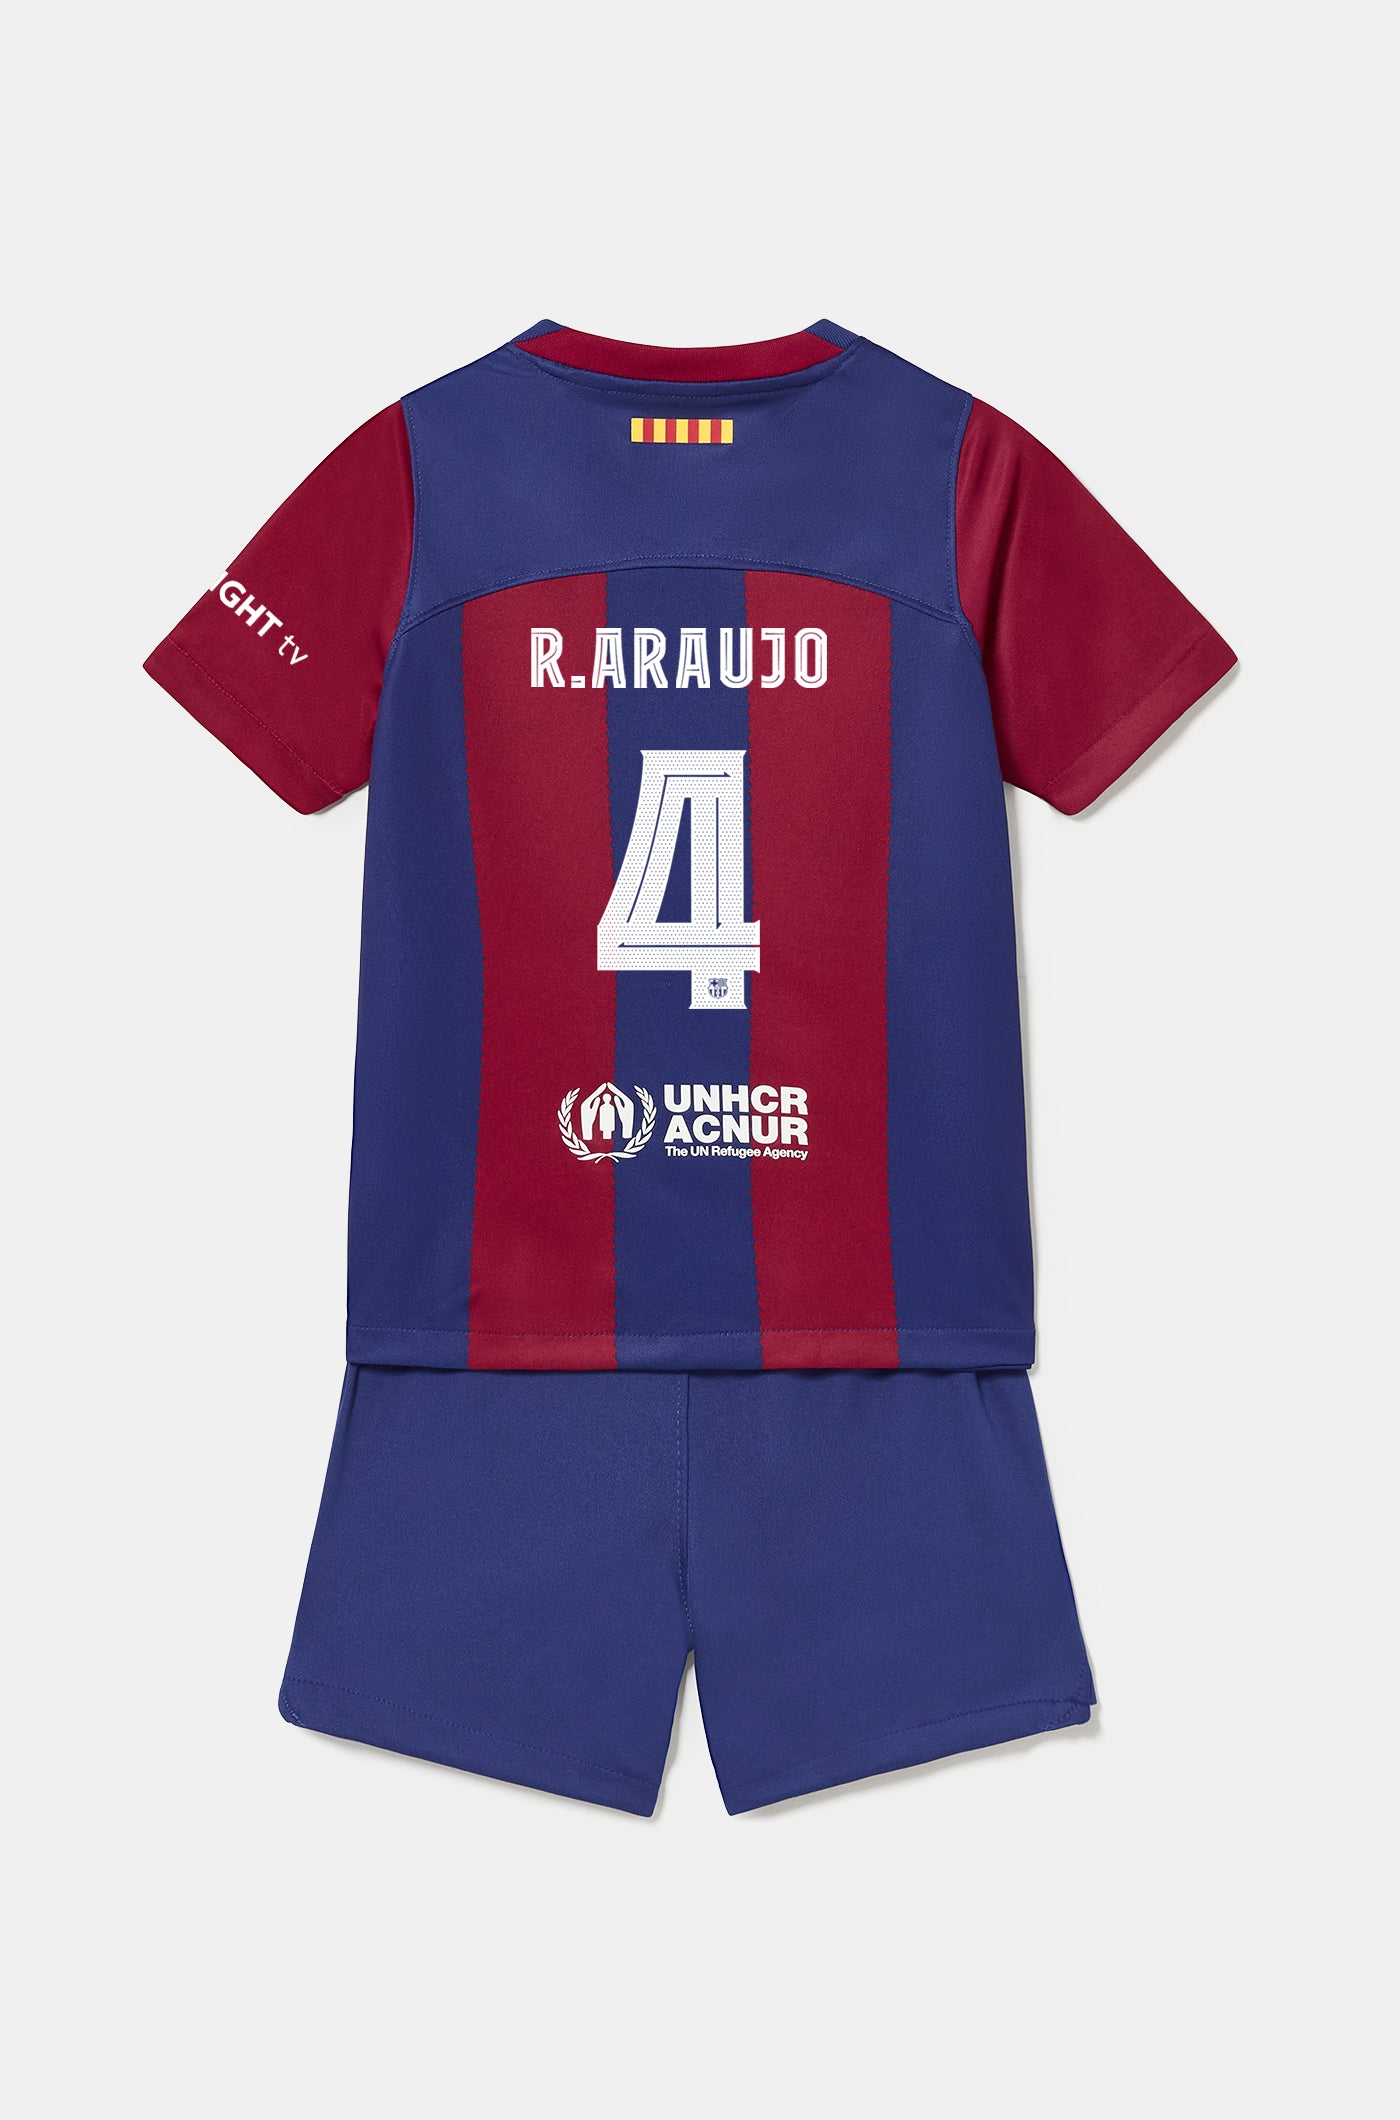 Original Player Issue 2020-21 Barcelona Away Name Number Set #4 R. ARAUJO  La Liga Avery – Kitroom Football